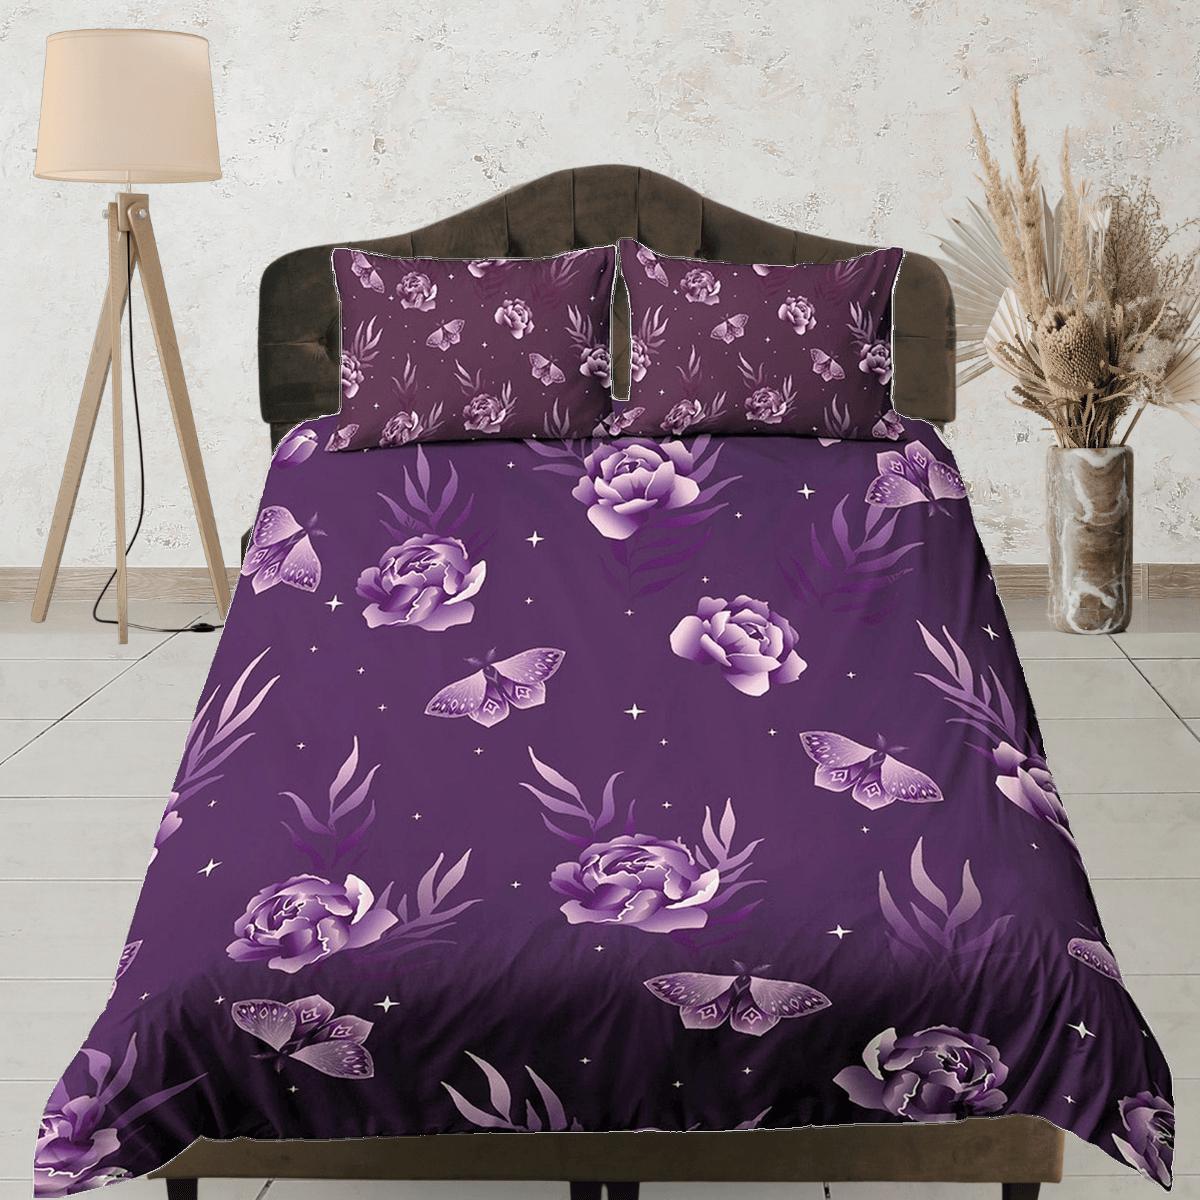 daintyduvet Celestial purple bedding luna moth, witchy decor dorm bedding, aesthetic duvet, boho bedding set full king queen, astrology gifts, gothic